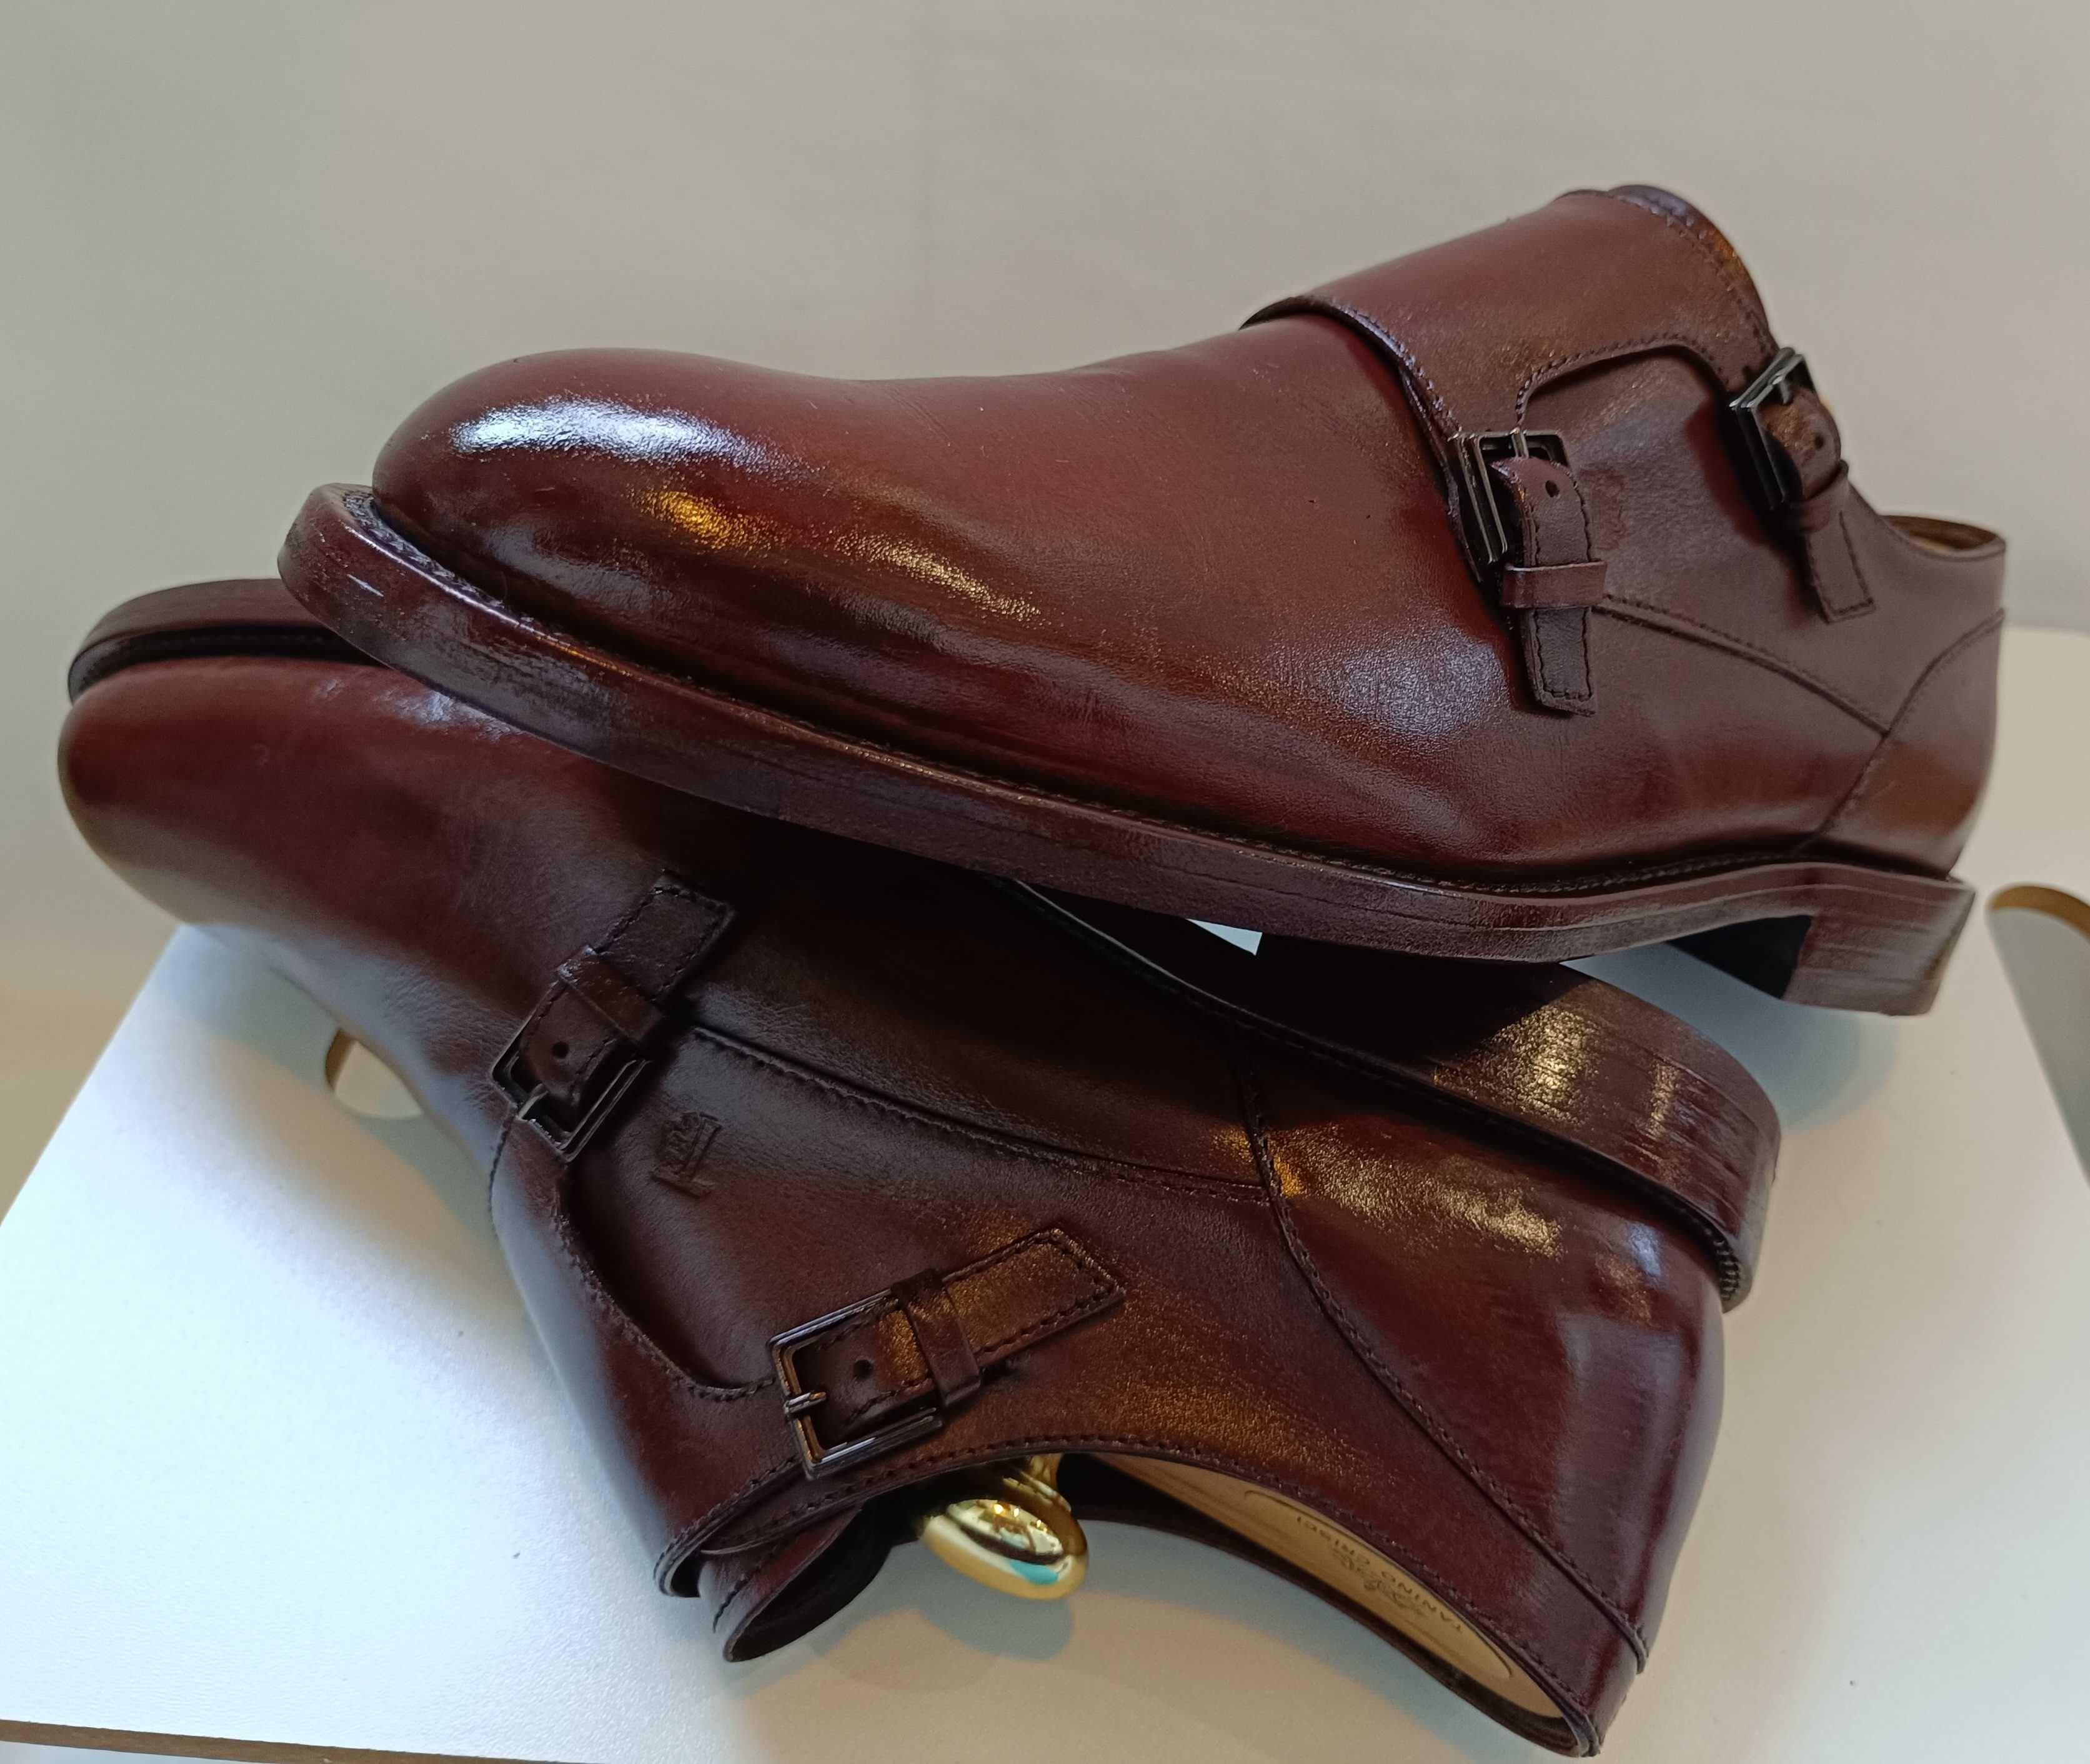 Pantofi monk de lux 41 41.5 lucrati manual TOD'S piele naturala moale